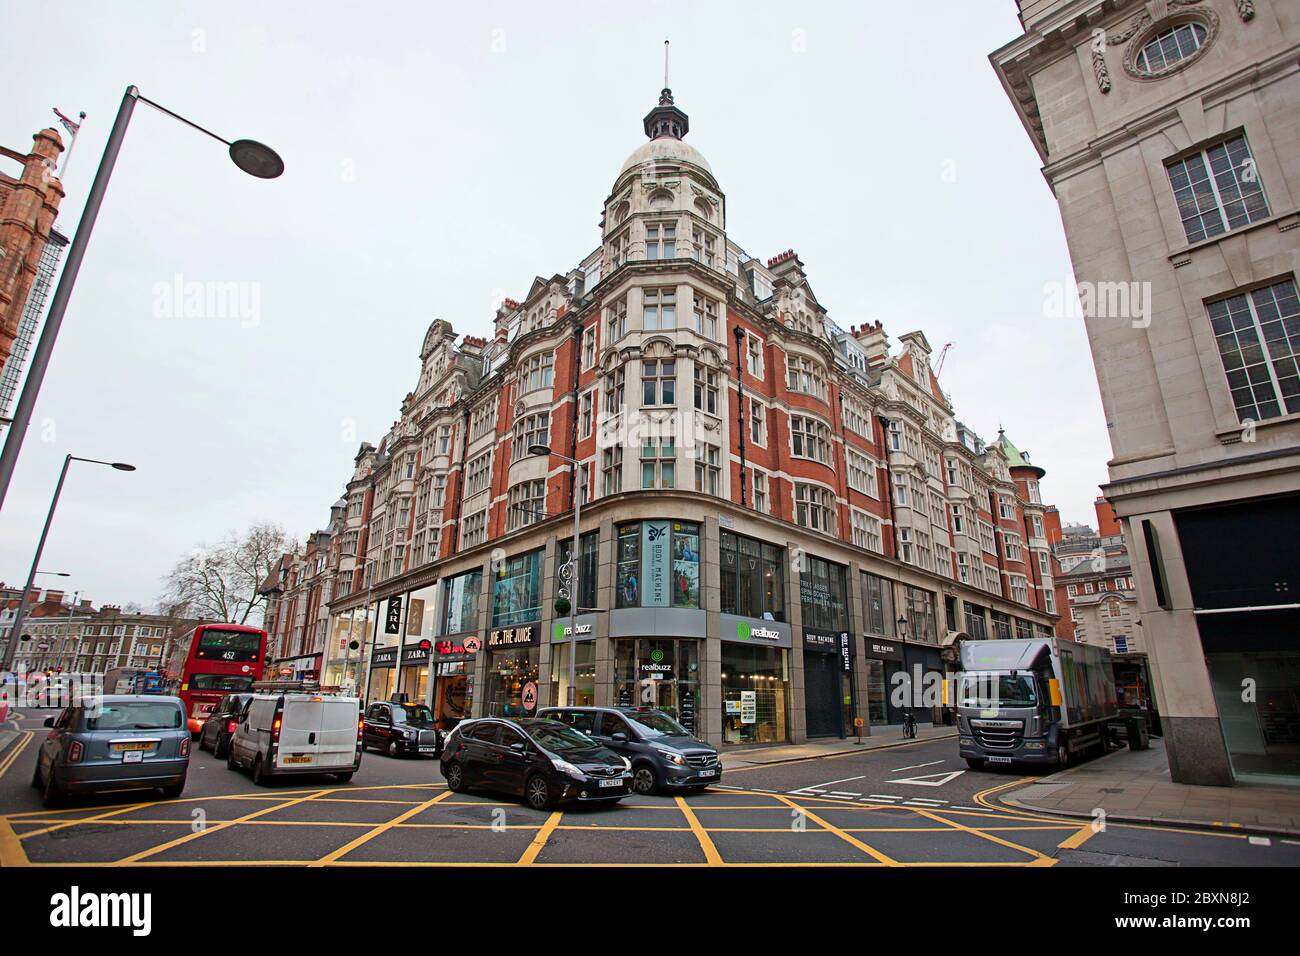 realbuzz, JOE & THE JUICE, Simit Sarayi, Zara, Body Machine, Kensington High Street, London Stock Photo